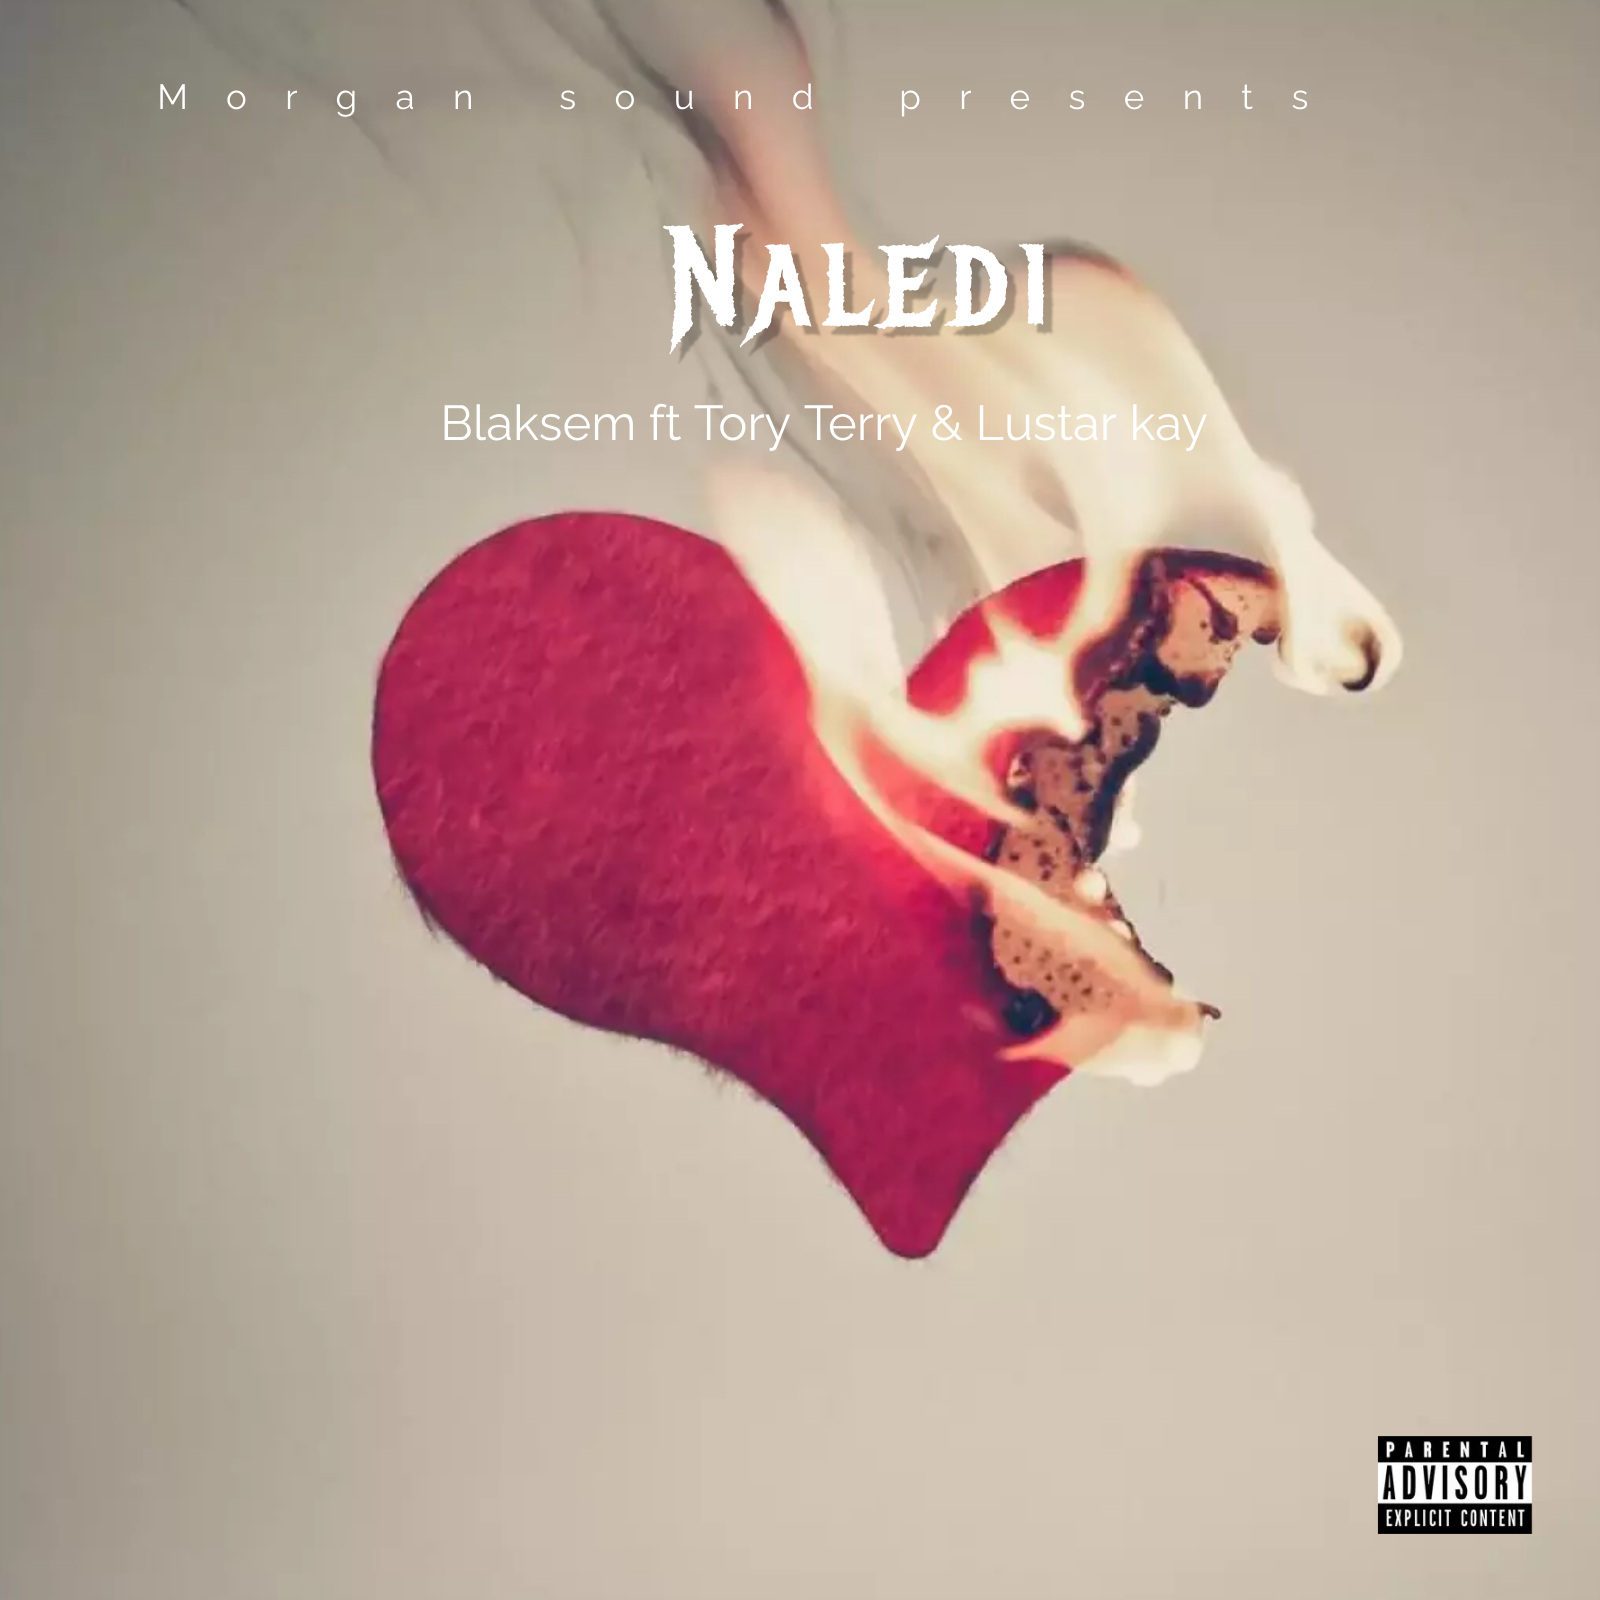 Naledi (main mix - Sachez ft Tory Terry & Lustar kay